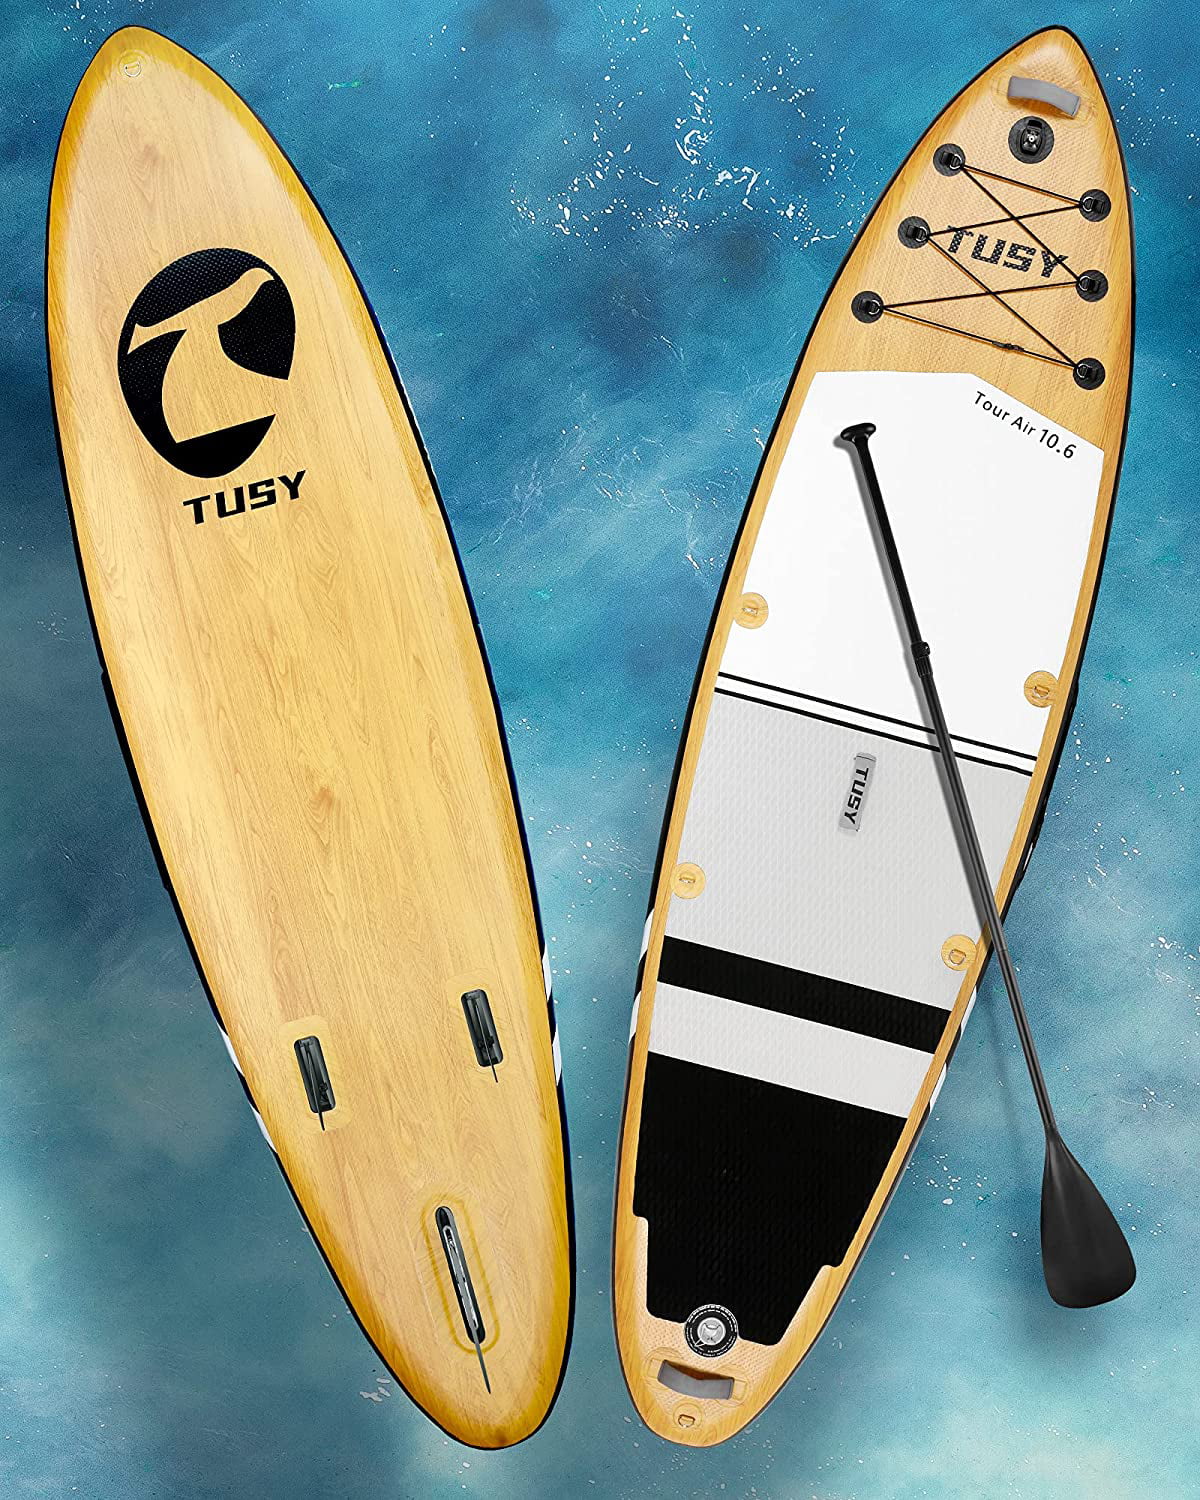 Details about   TPU Surfboard Leash Durable Wear Resistant Surfboard Leash Rope Surfboard Leash 